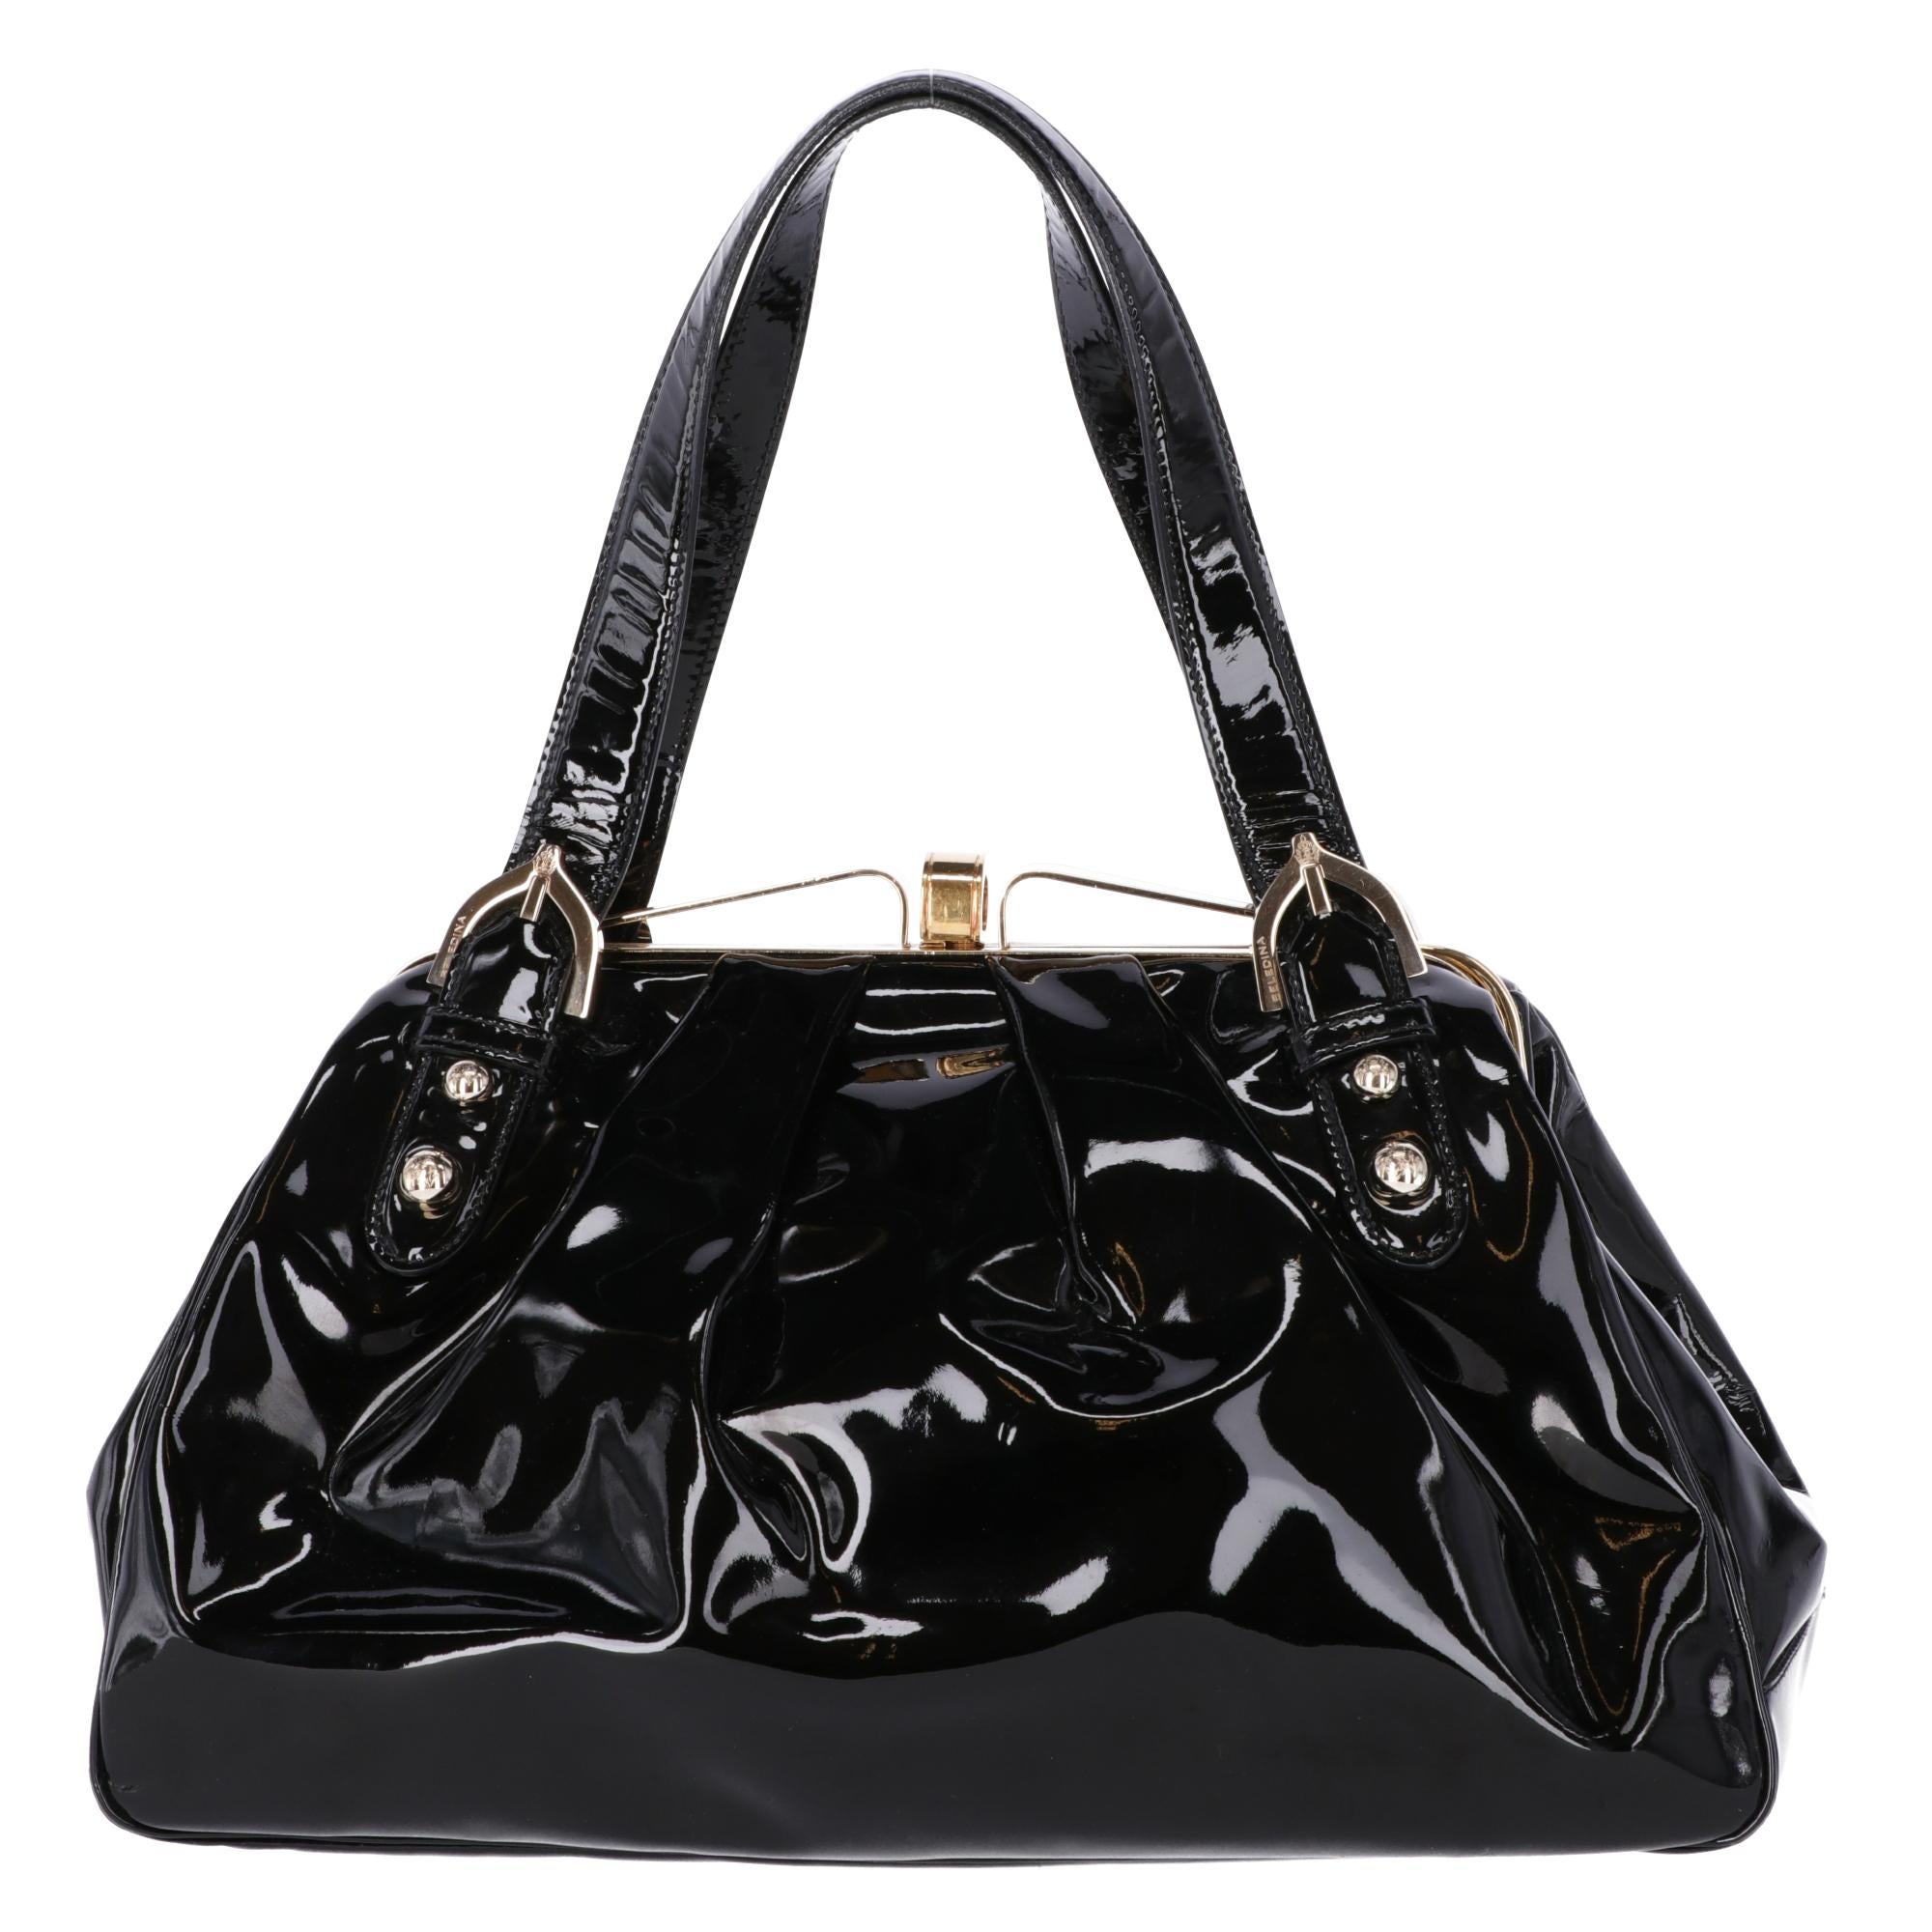 Women's Contemporary Beledina Black Patent Leather Tote Bag